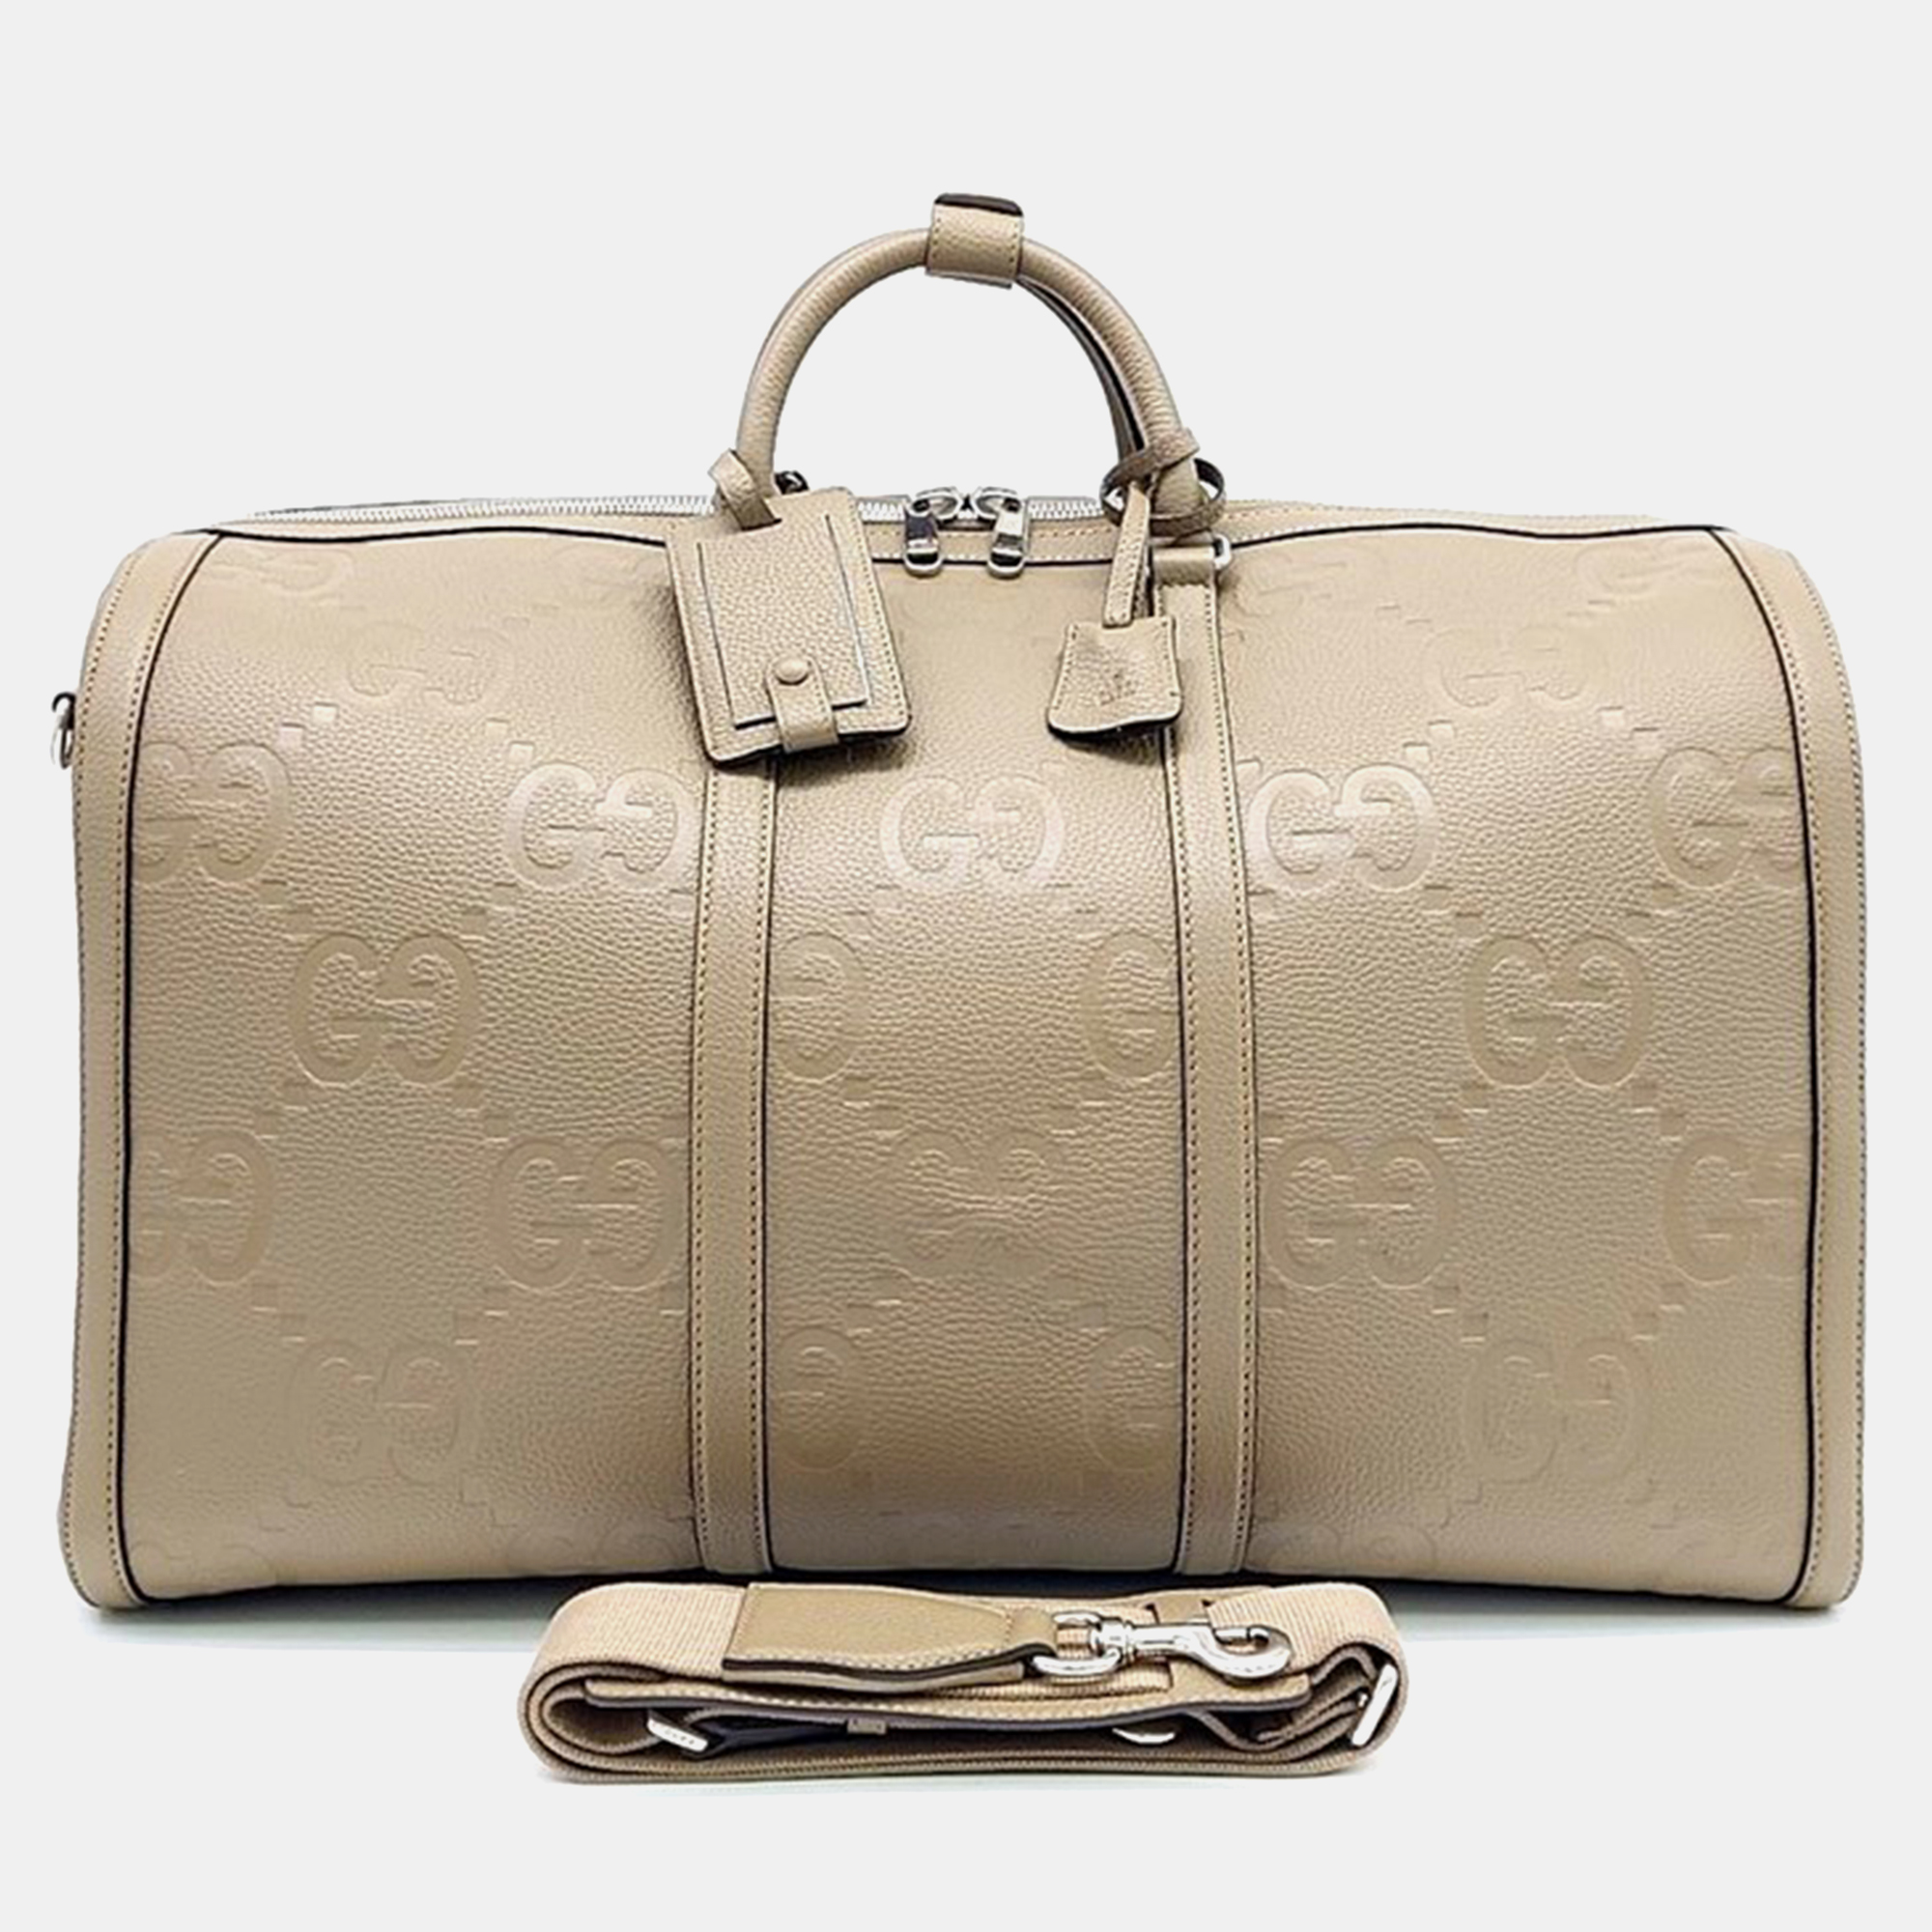 Gucci jumbo gg large duffle bag (725129)